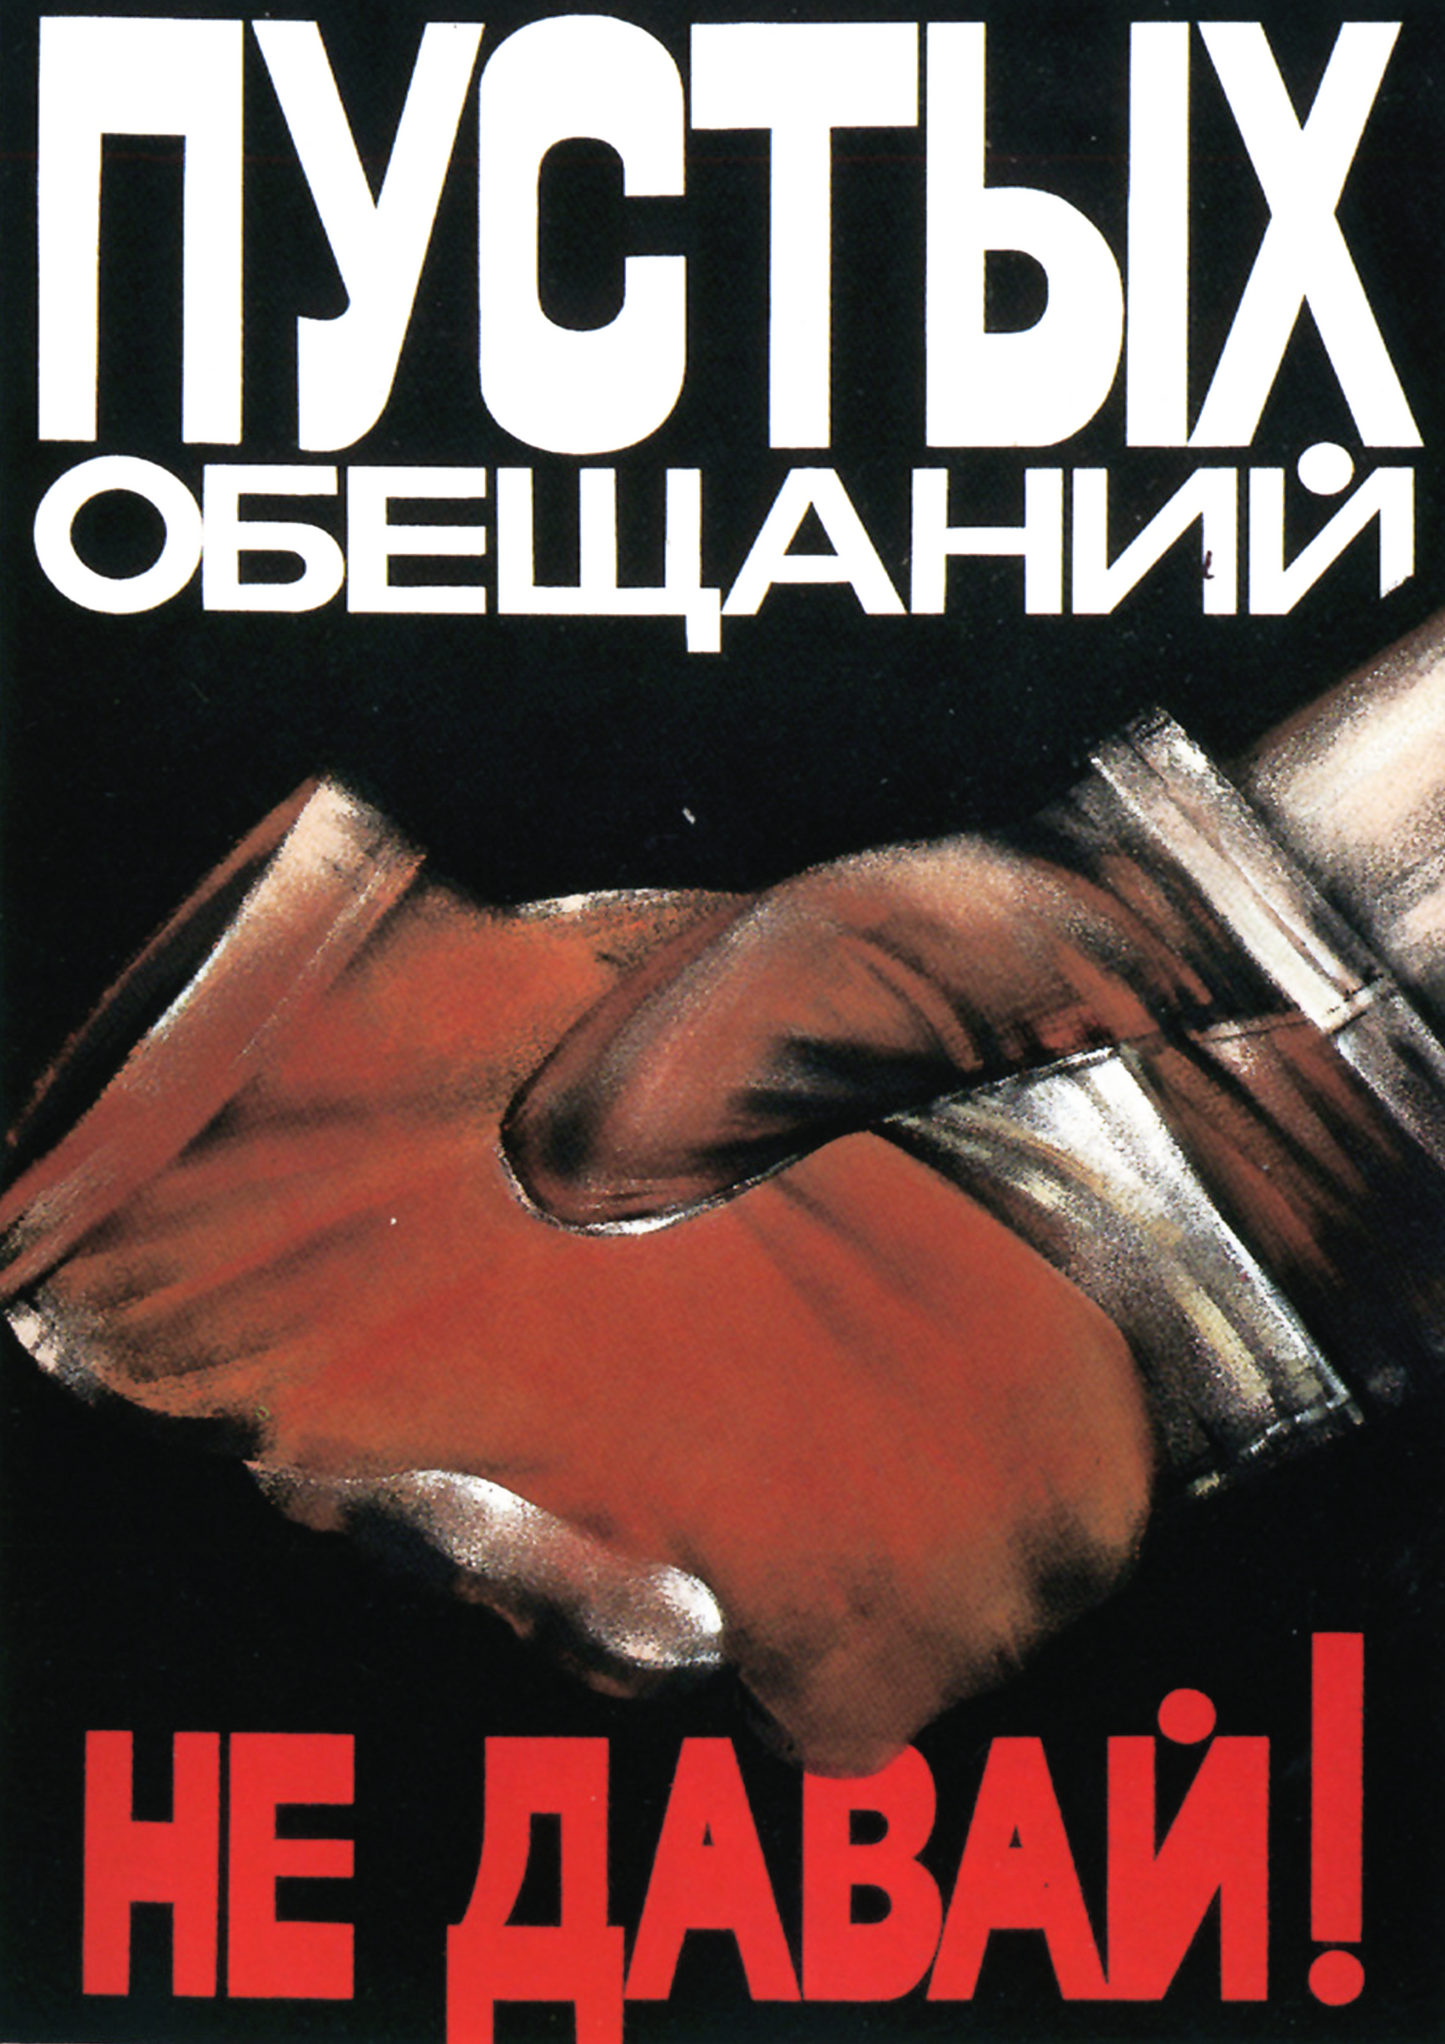 Empty Promises - Soviet Propaganda poster